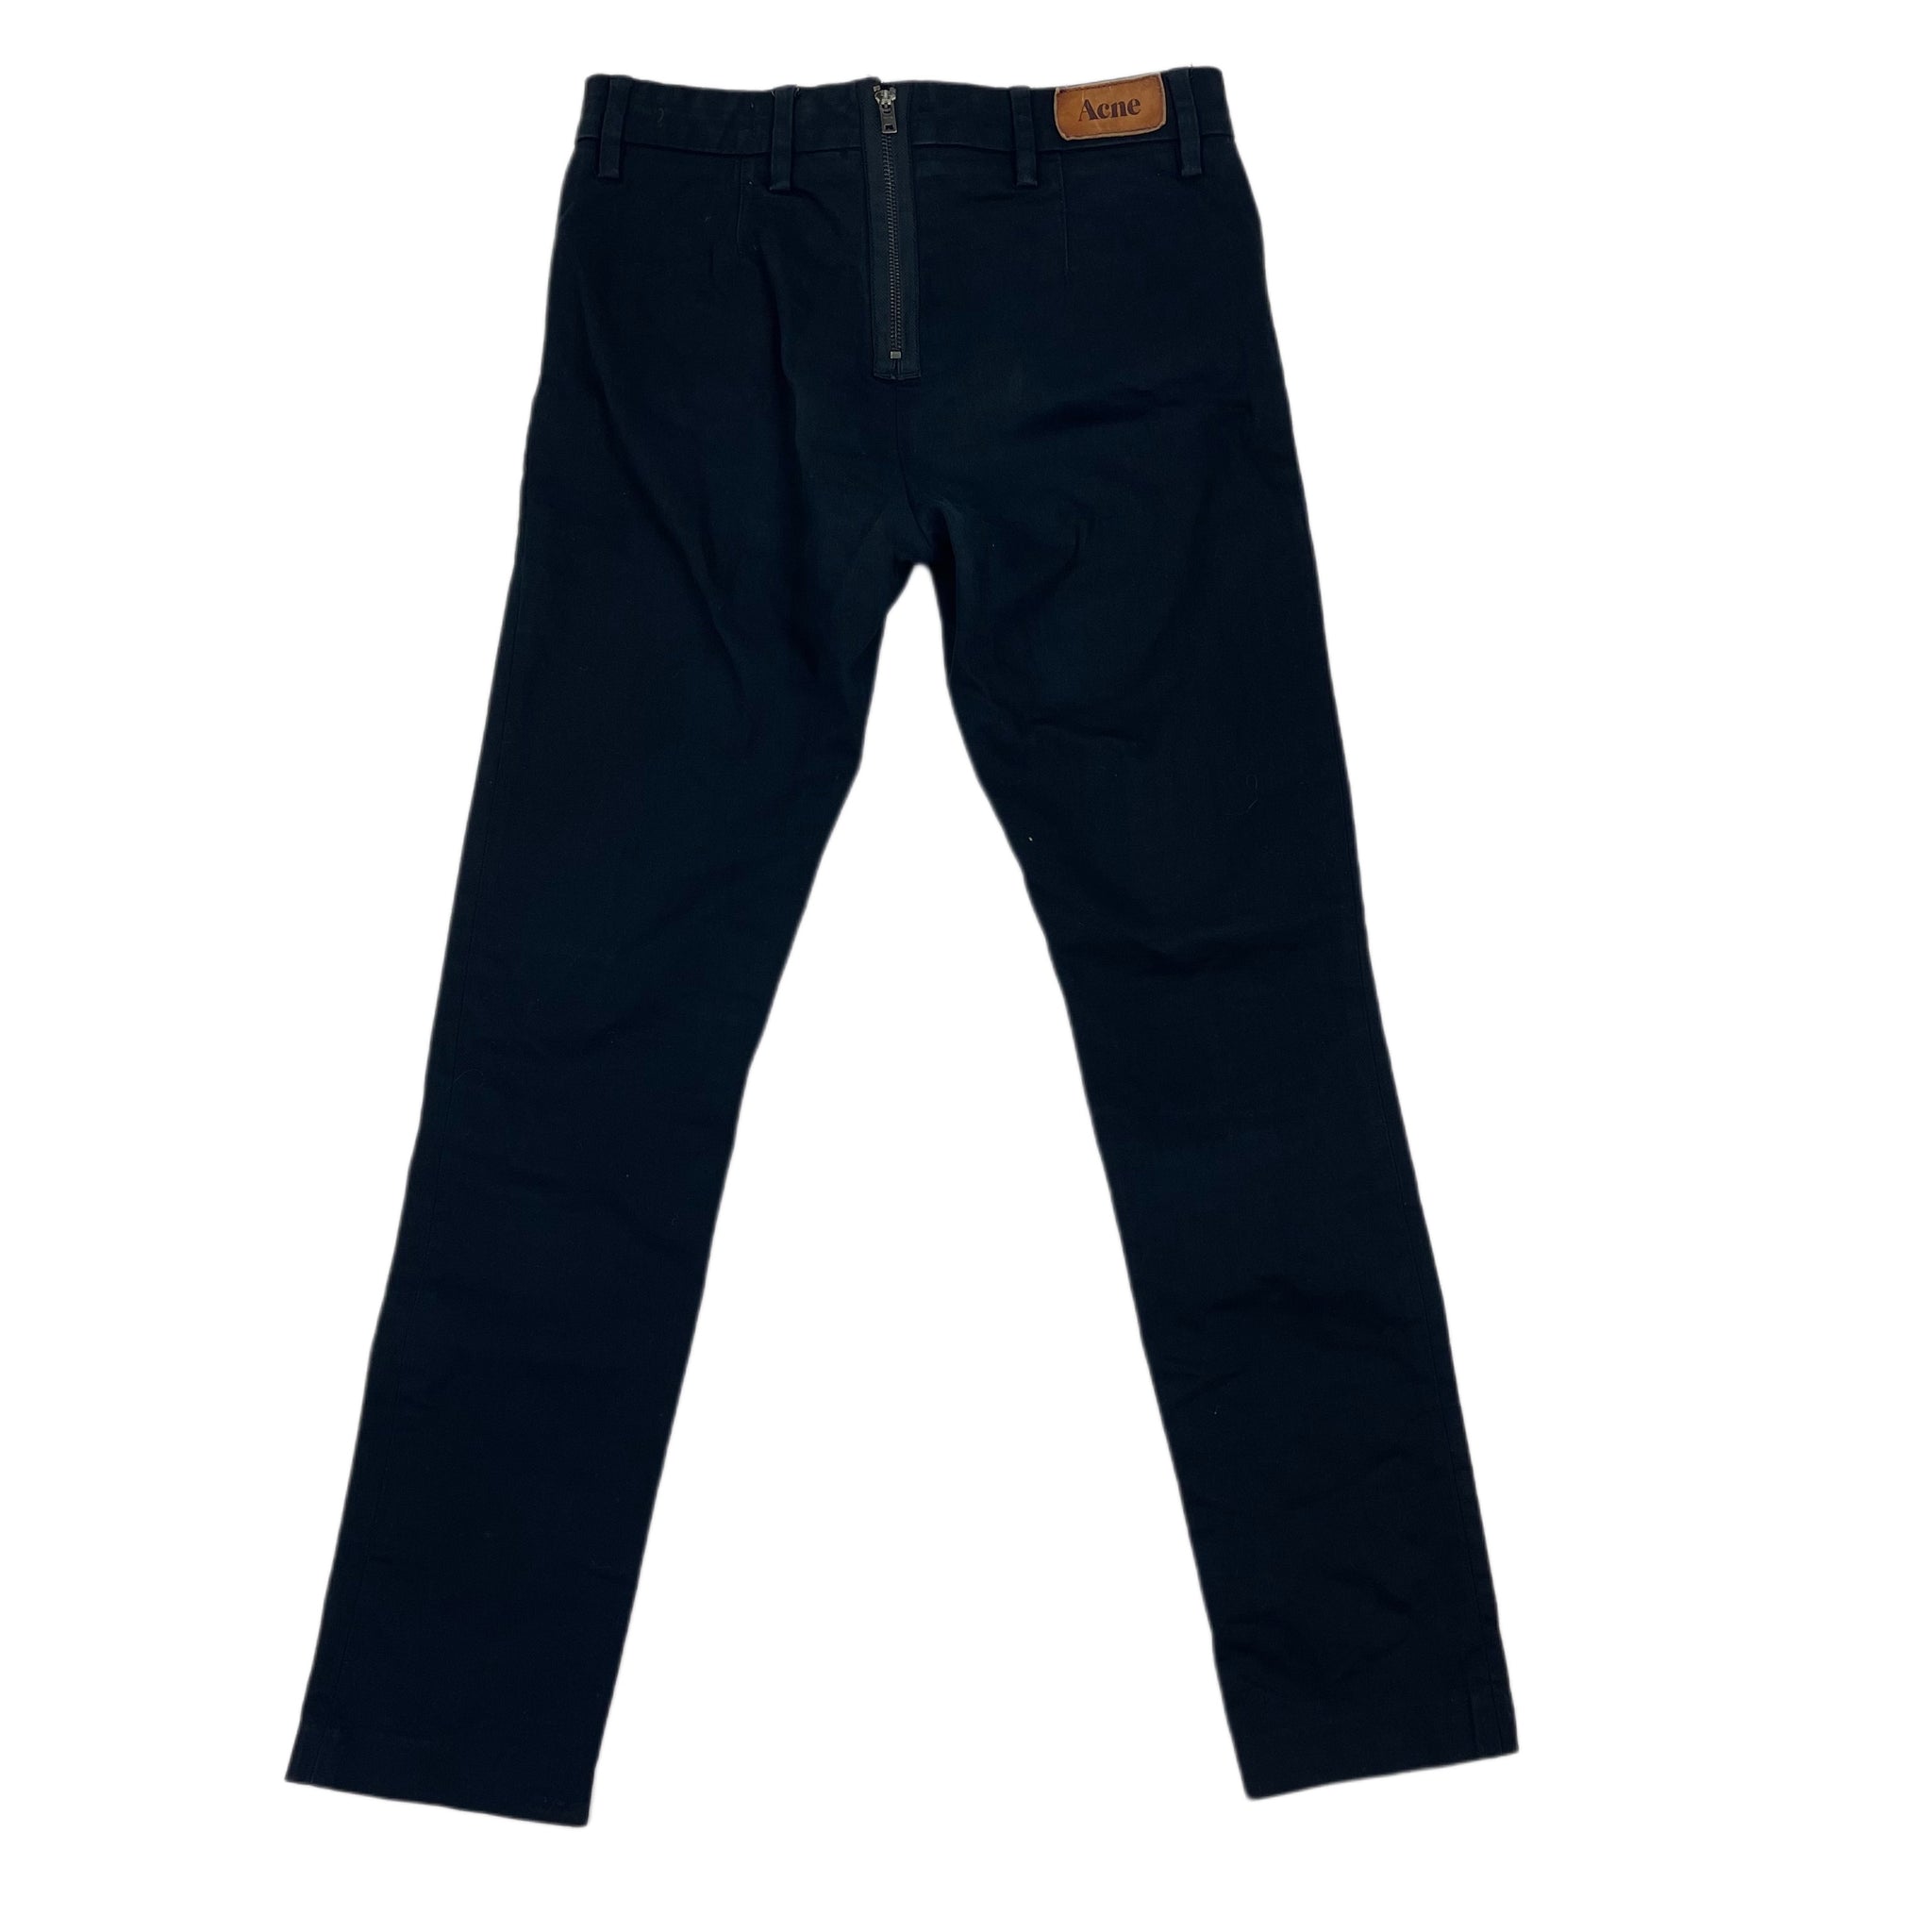 Black Acne Jeans Pants - M/W31/L32